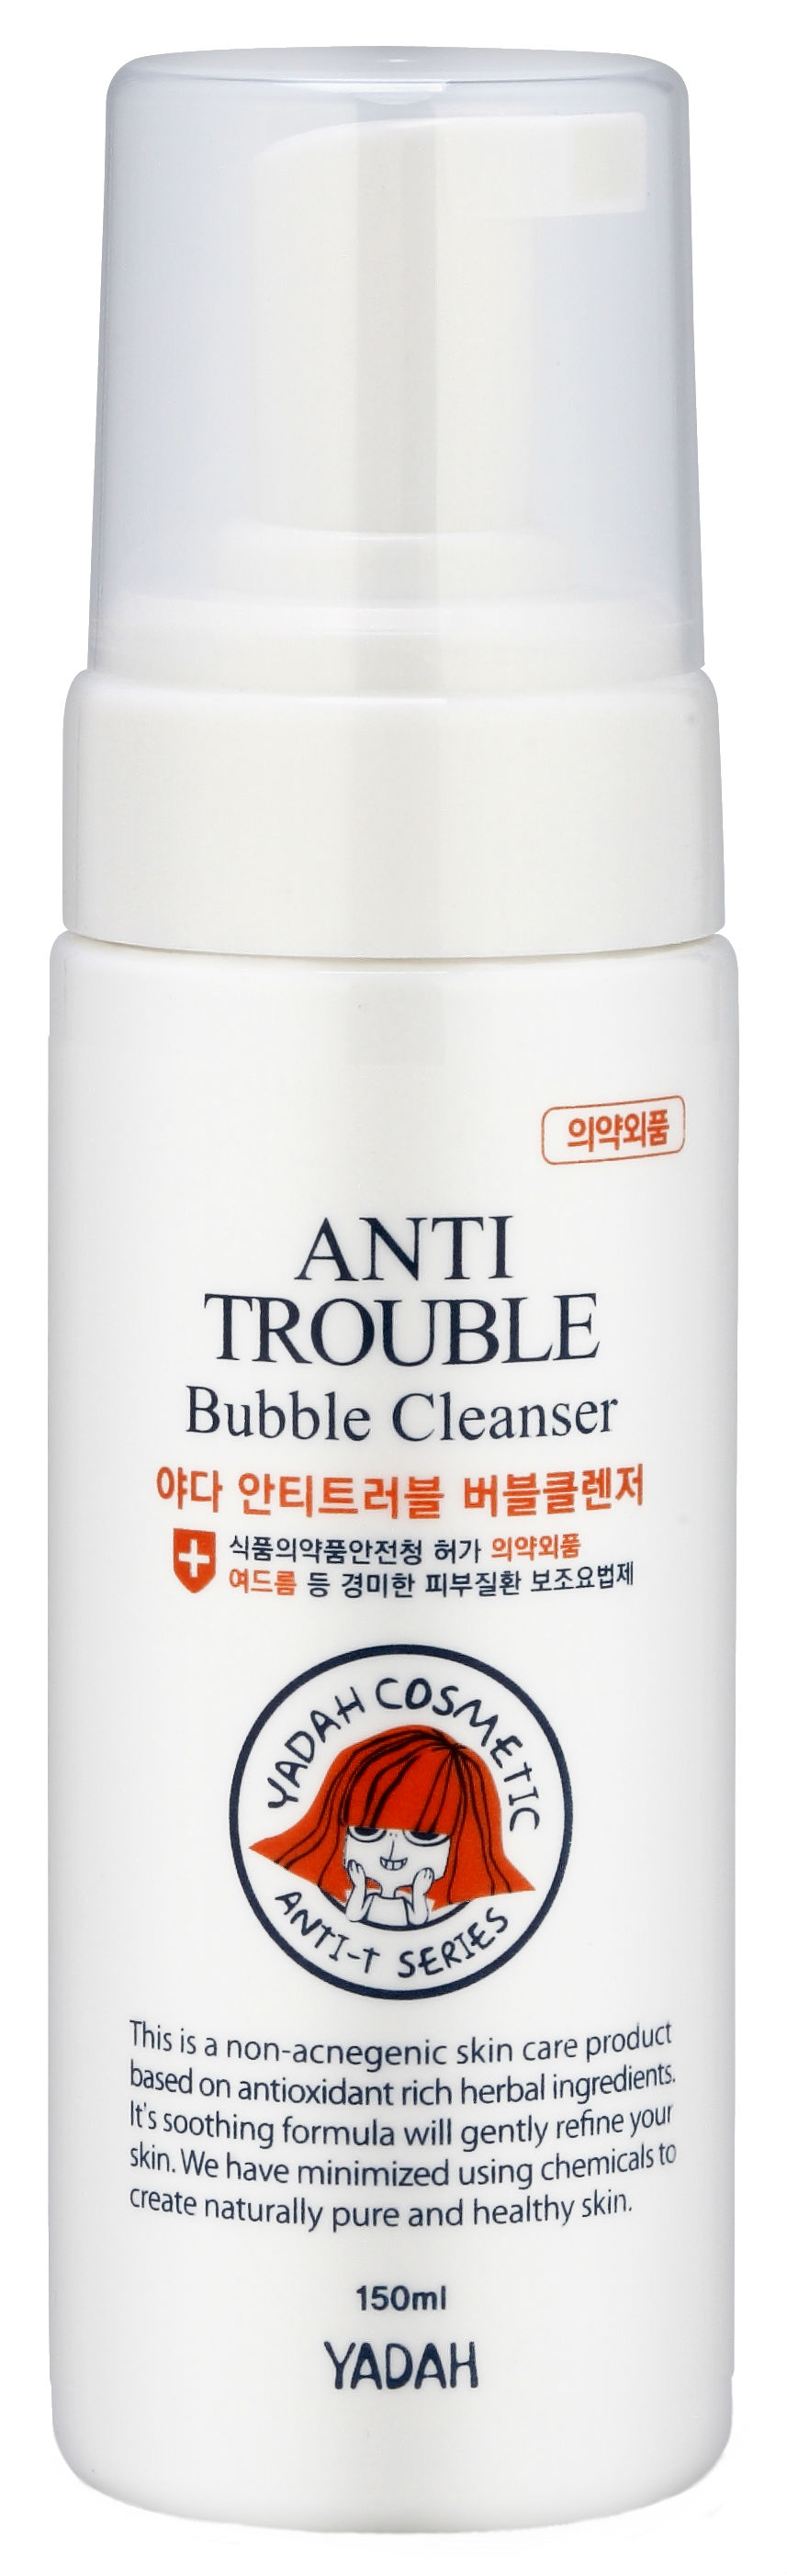 Пенка для умывания Yadah Anti Trouble Bubble Cleanser 150 мл пенка для умывания yadah bubble deep cleanser 150 мл